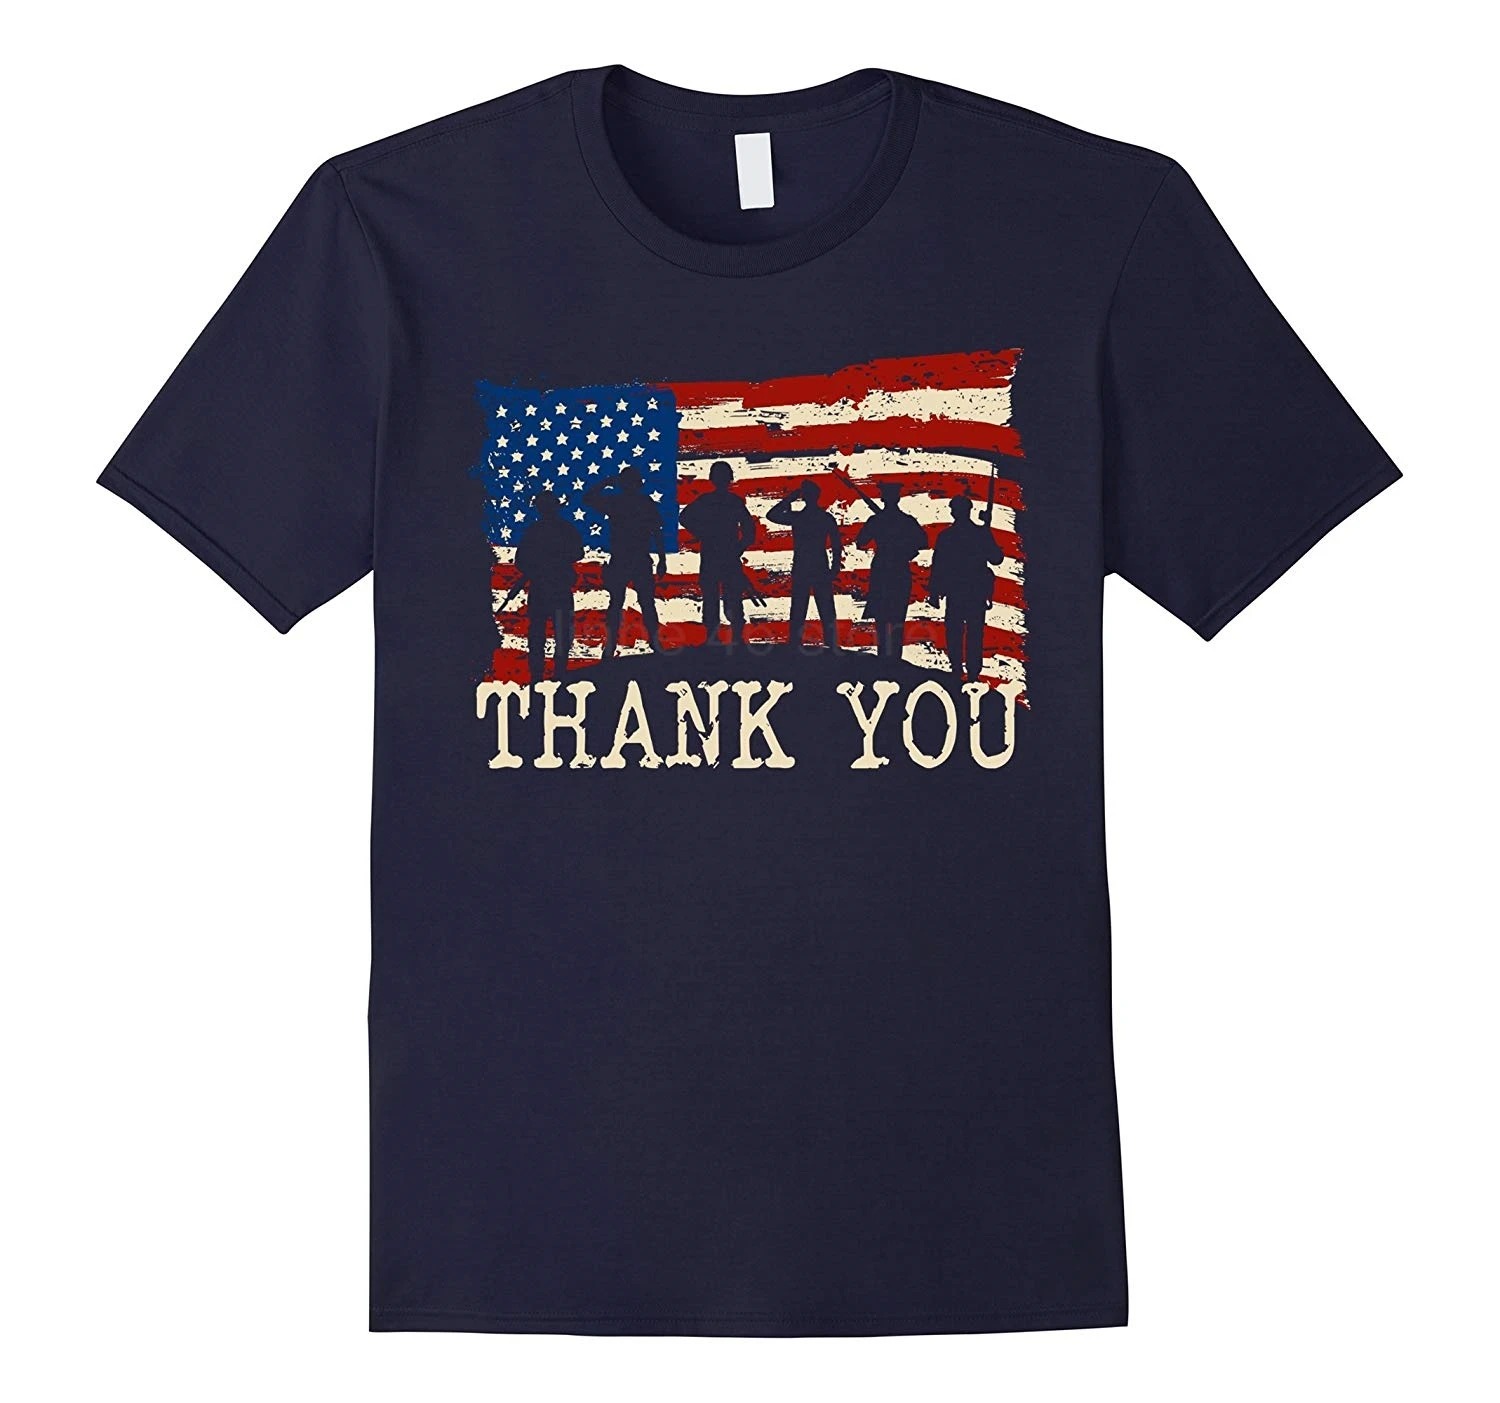 Американский Флаг футболки спасибо ветеранов летняя уличная мода короткий рукав Футболка